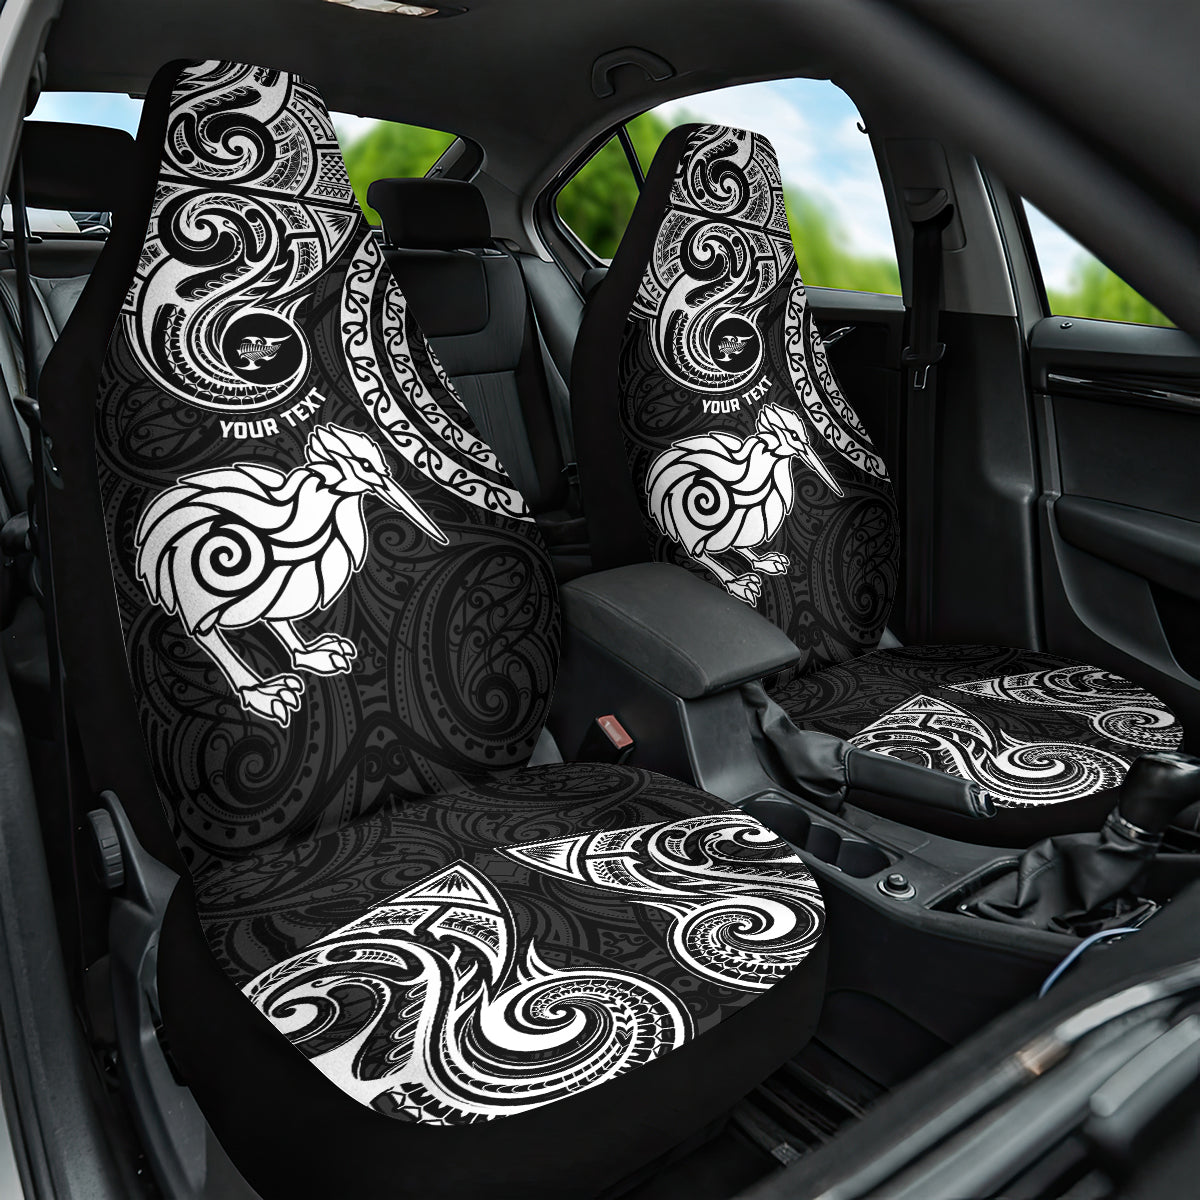 Personalised New Zealand Car Seat Cover Stylized Kiwi Bird Tattoo Mix Koru Circle and Maori Ethnic Vibe LT03 One Size Black - Polynesian Pride